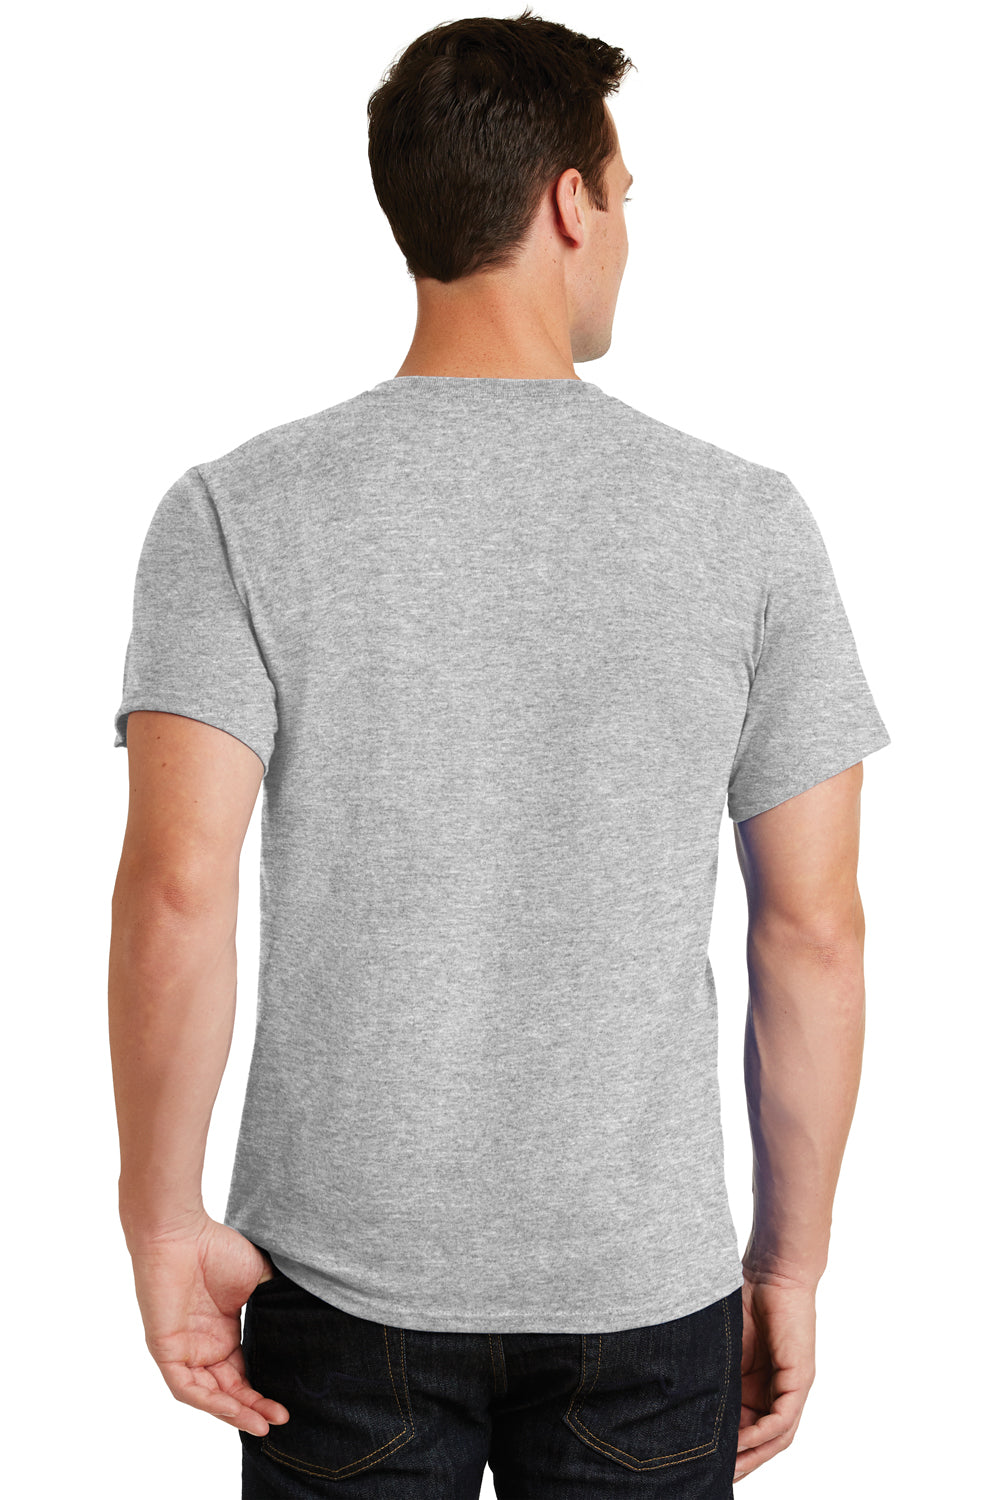 Port & Company PC61 Mens Essential Short Sleeve Crewneck T-Shirt Ash Grey Back